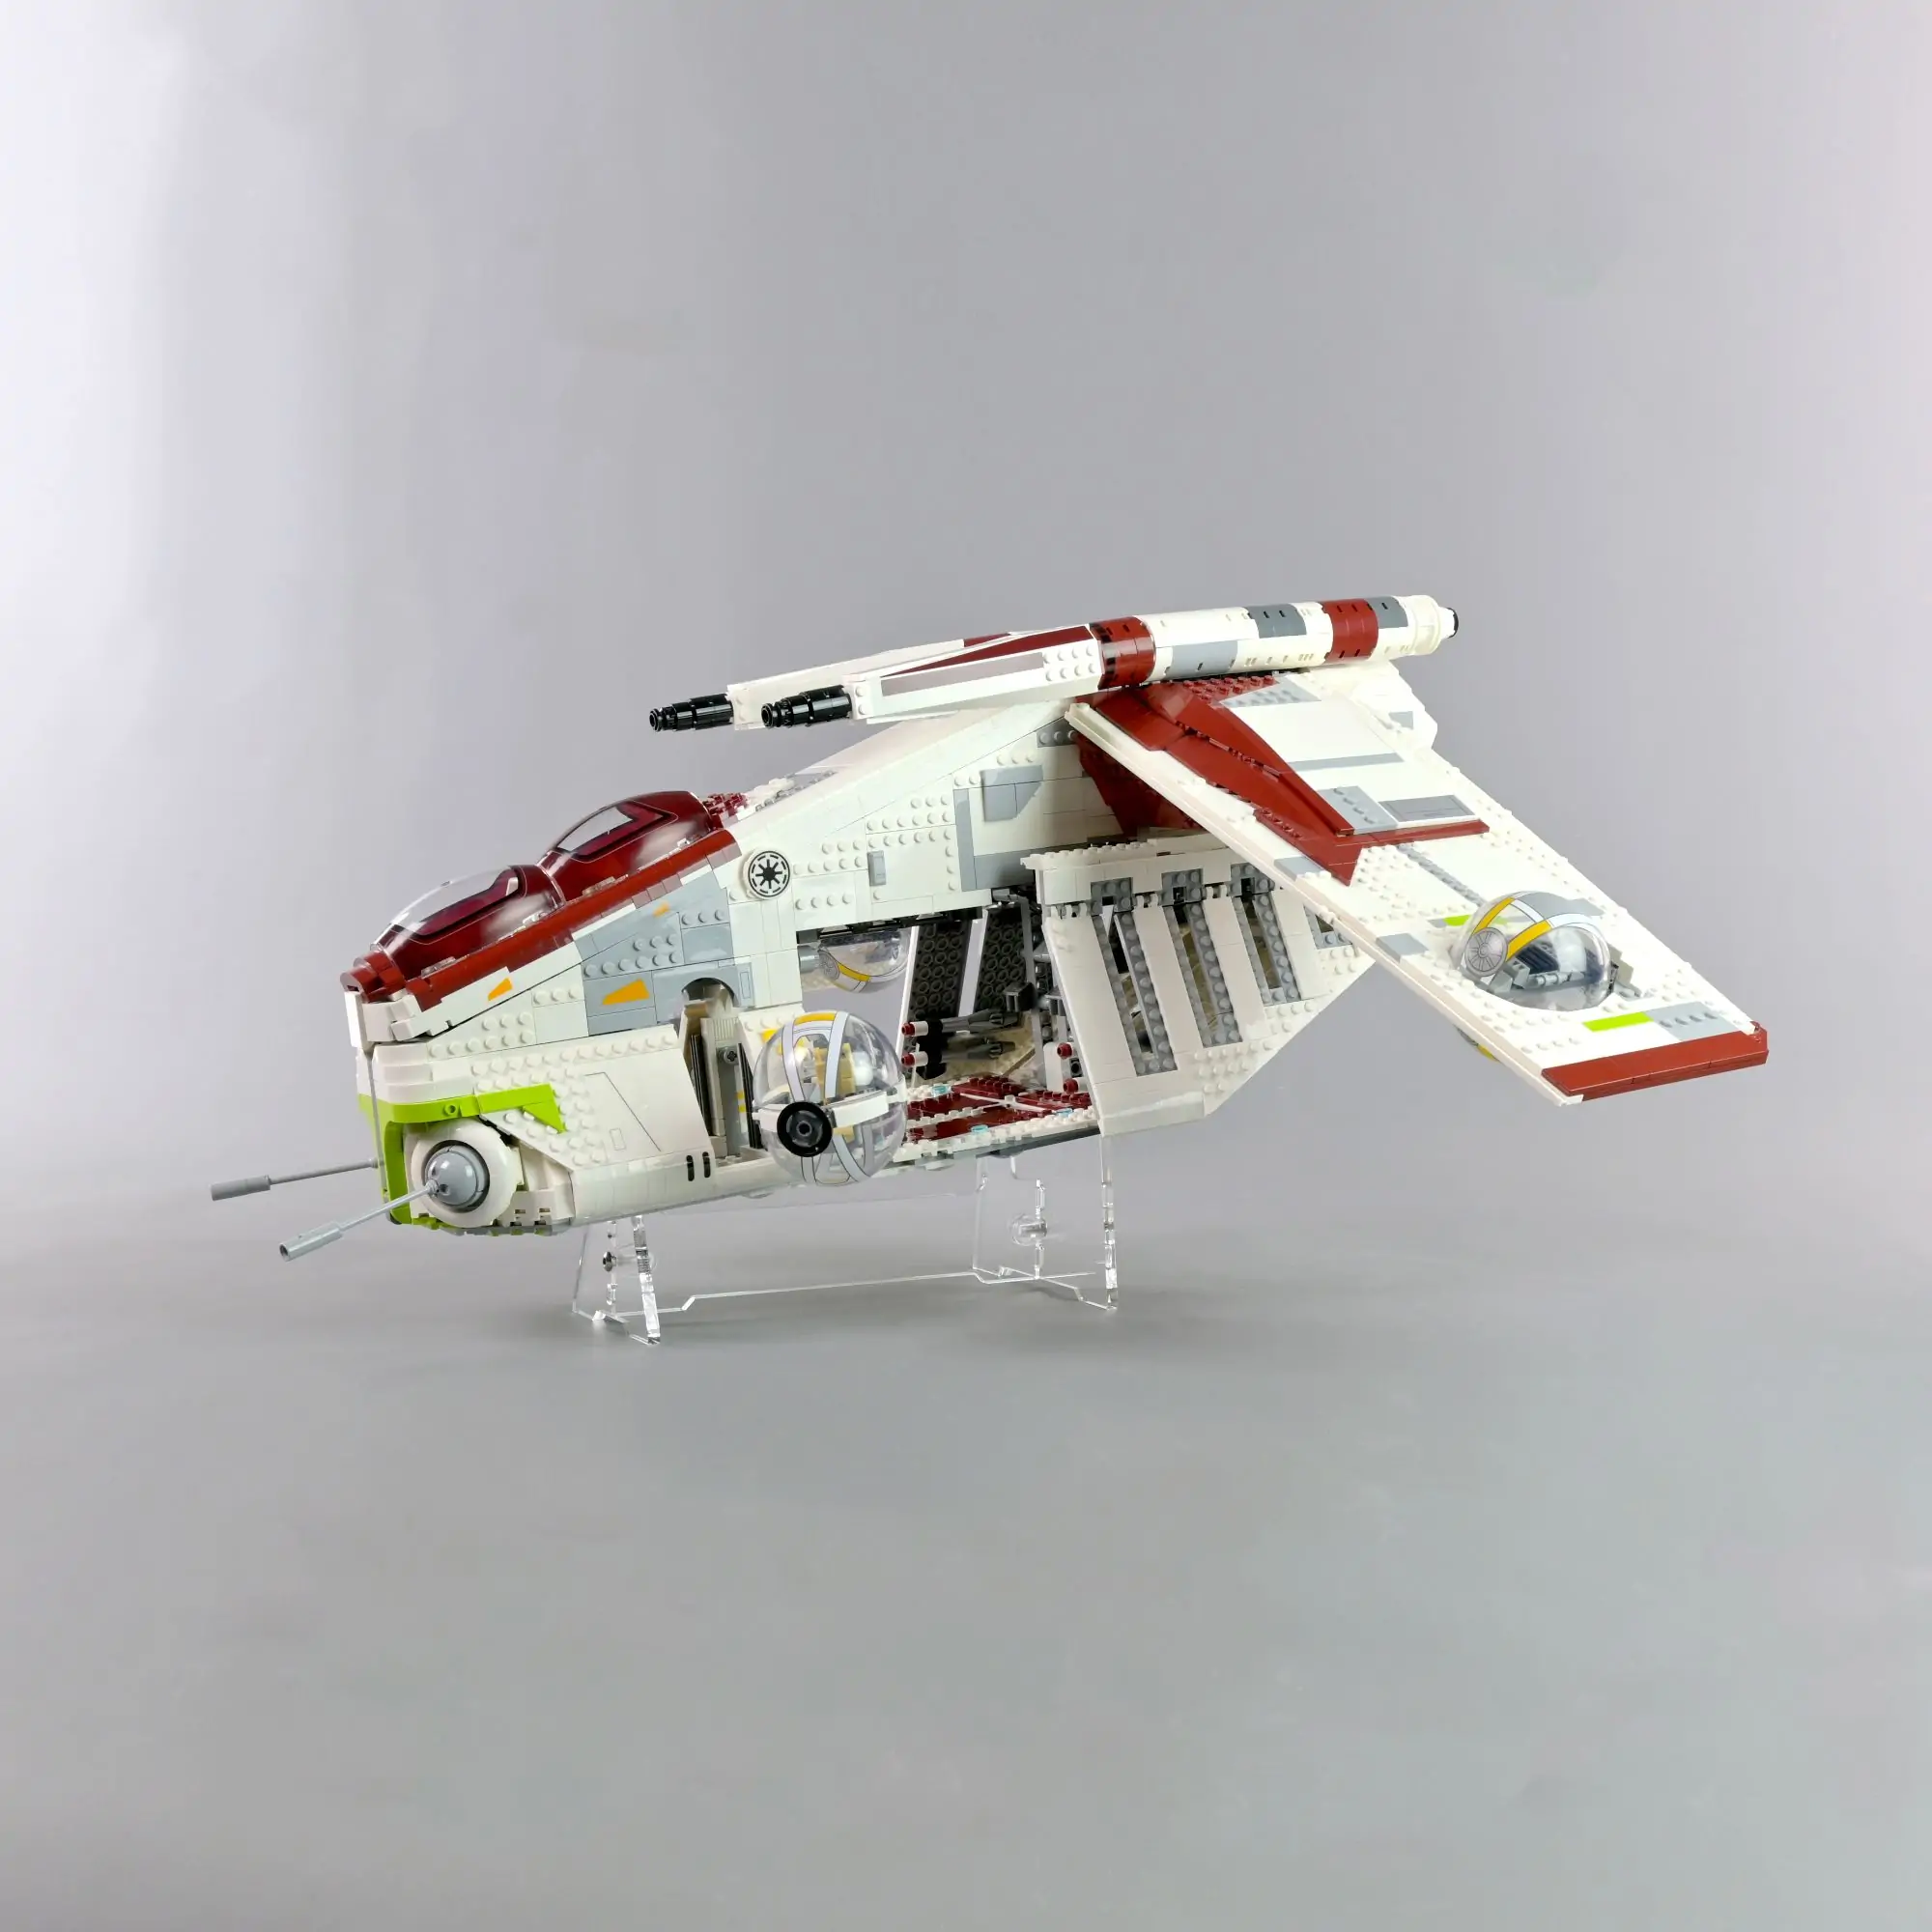  Lego Star Wars Republic Gunship 75309 UCS Display